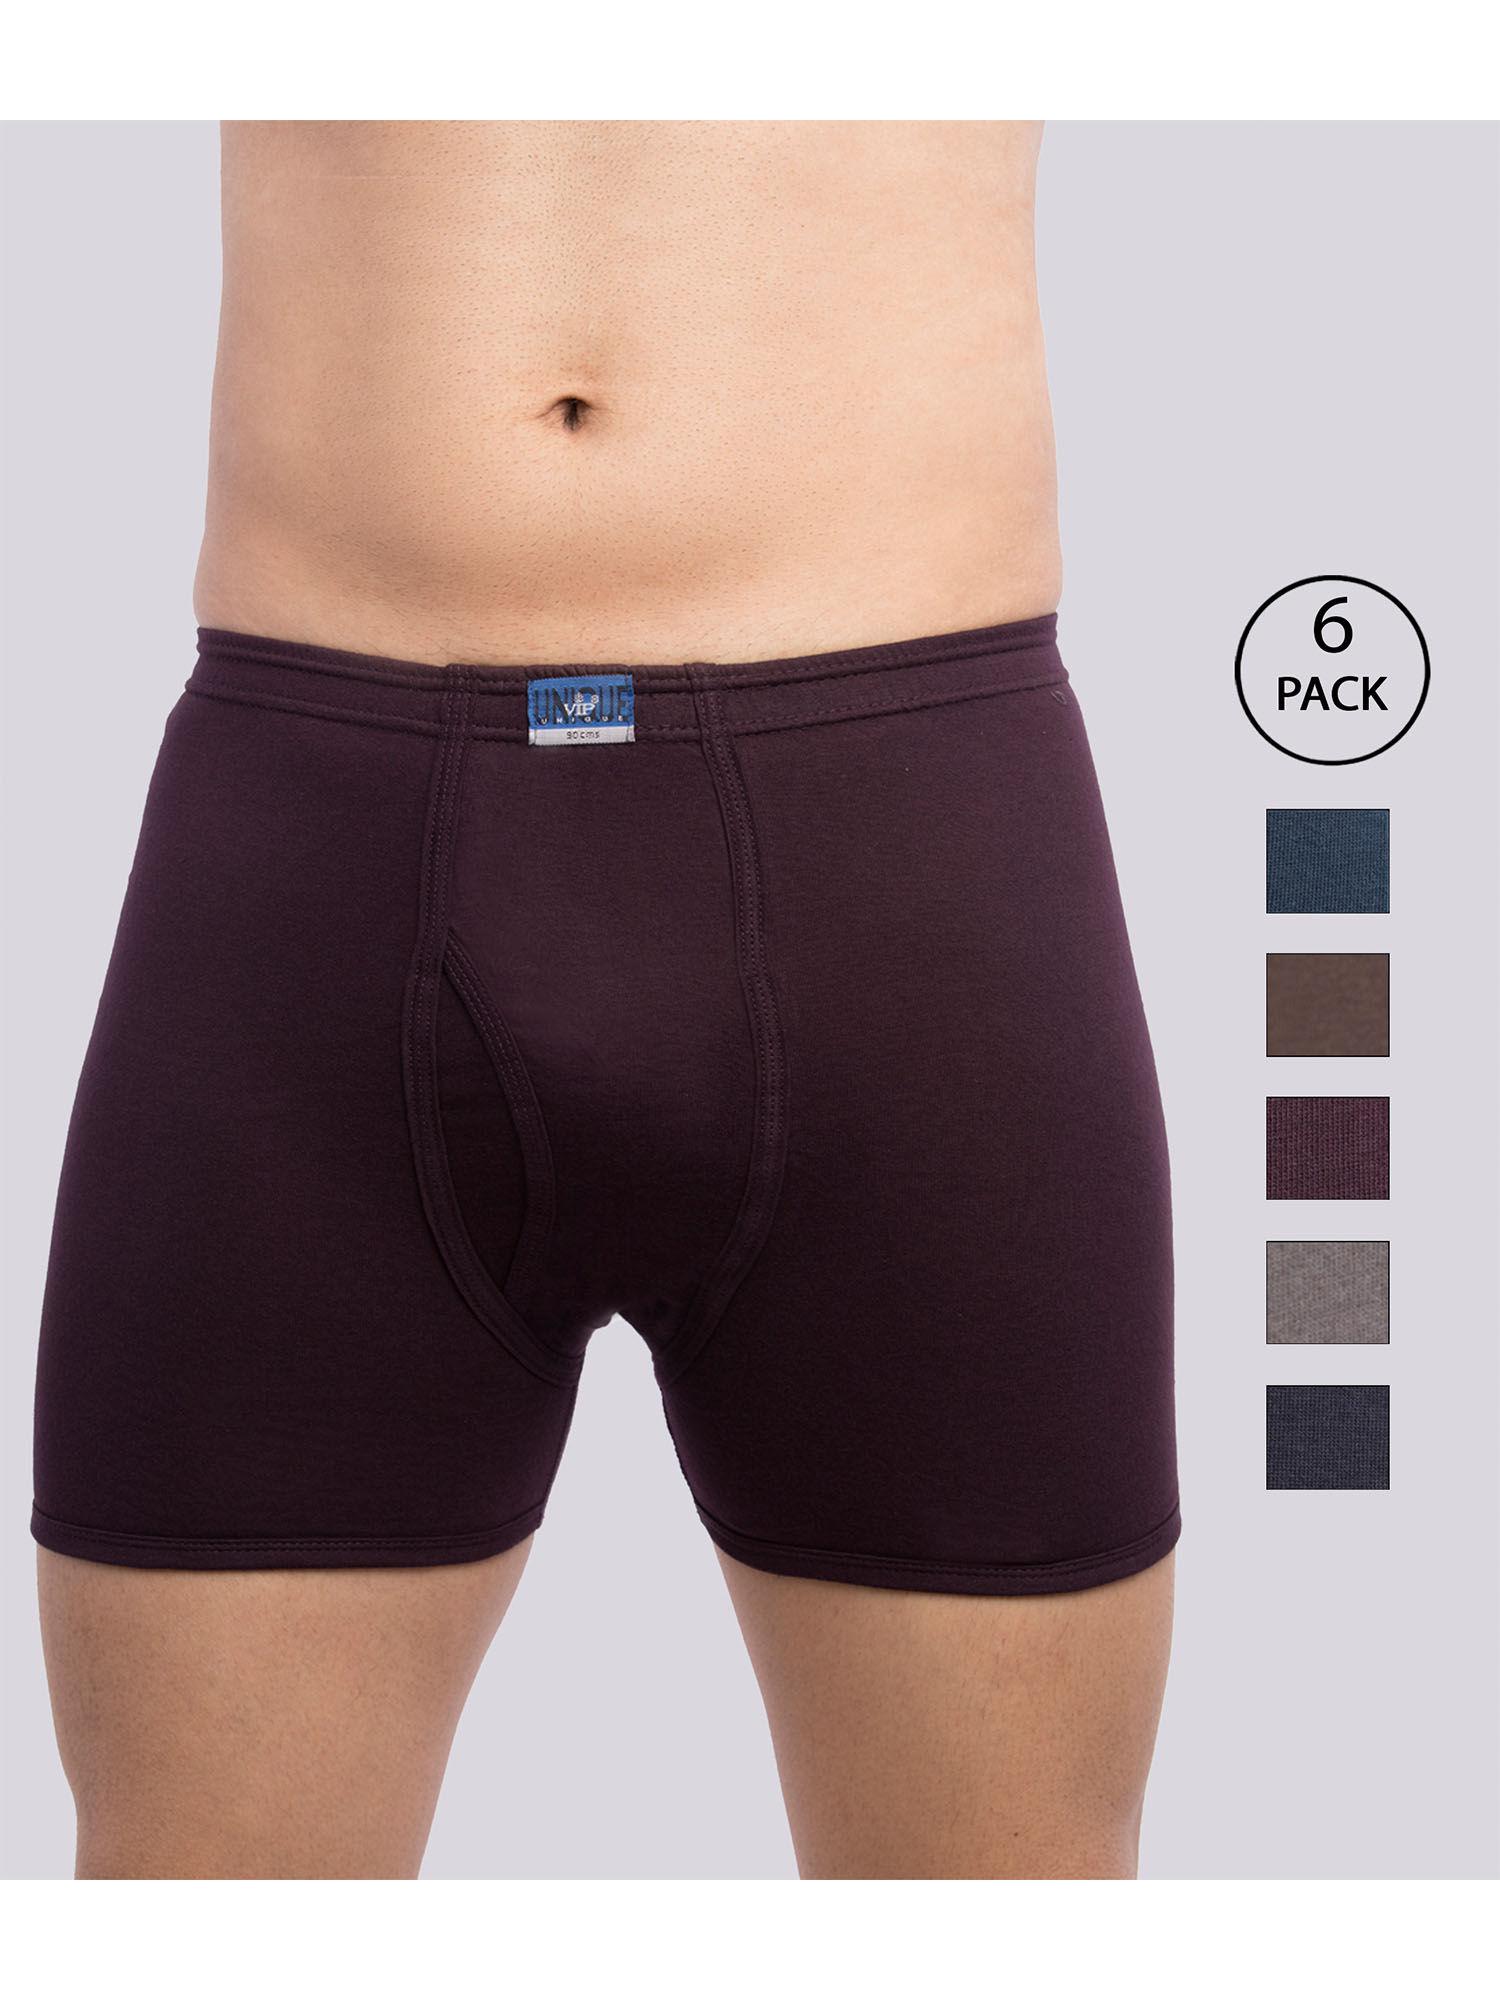 unique men's snug fit cotton trunks in assorted colors (pack of 6)